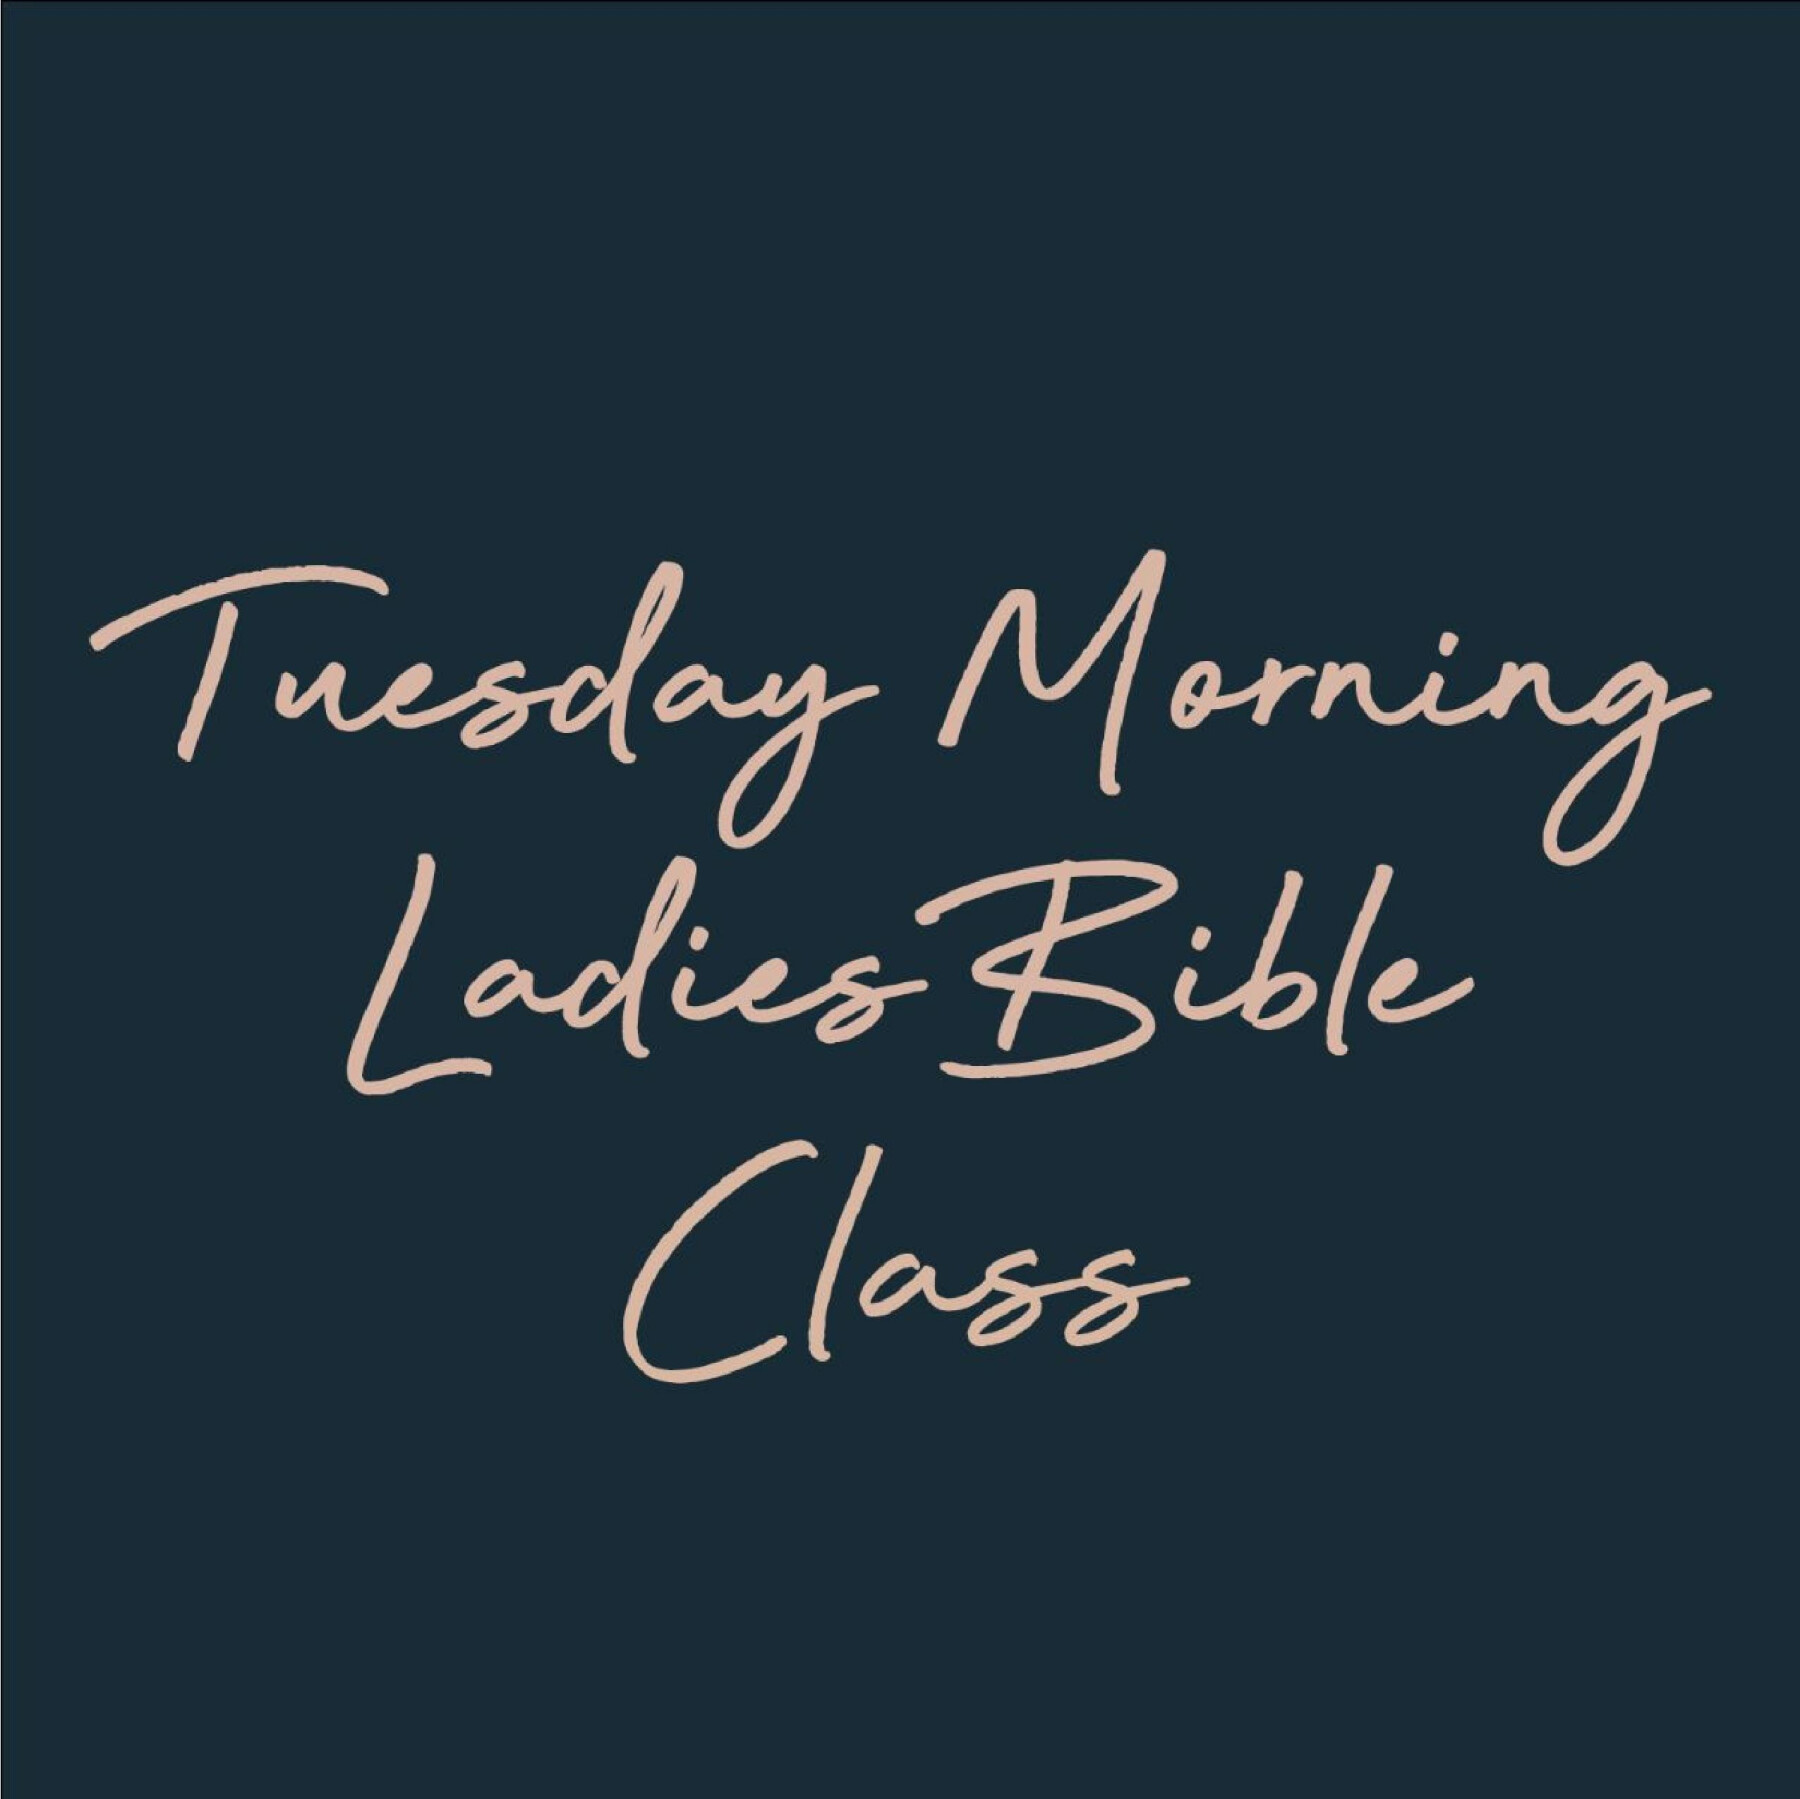 Tuesday Morning Ladies Bible Class (TMLBC)